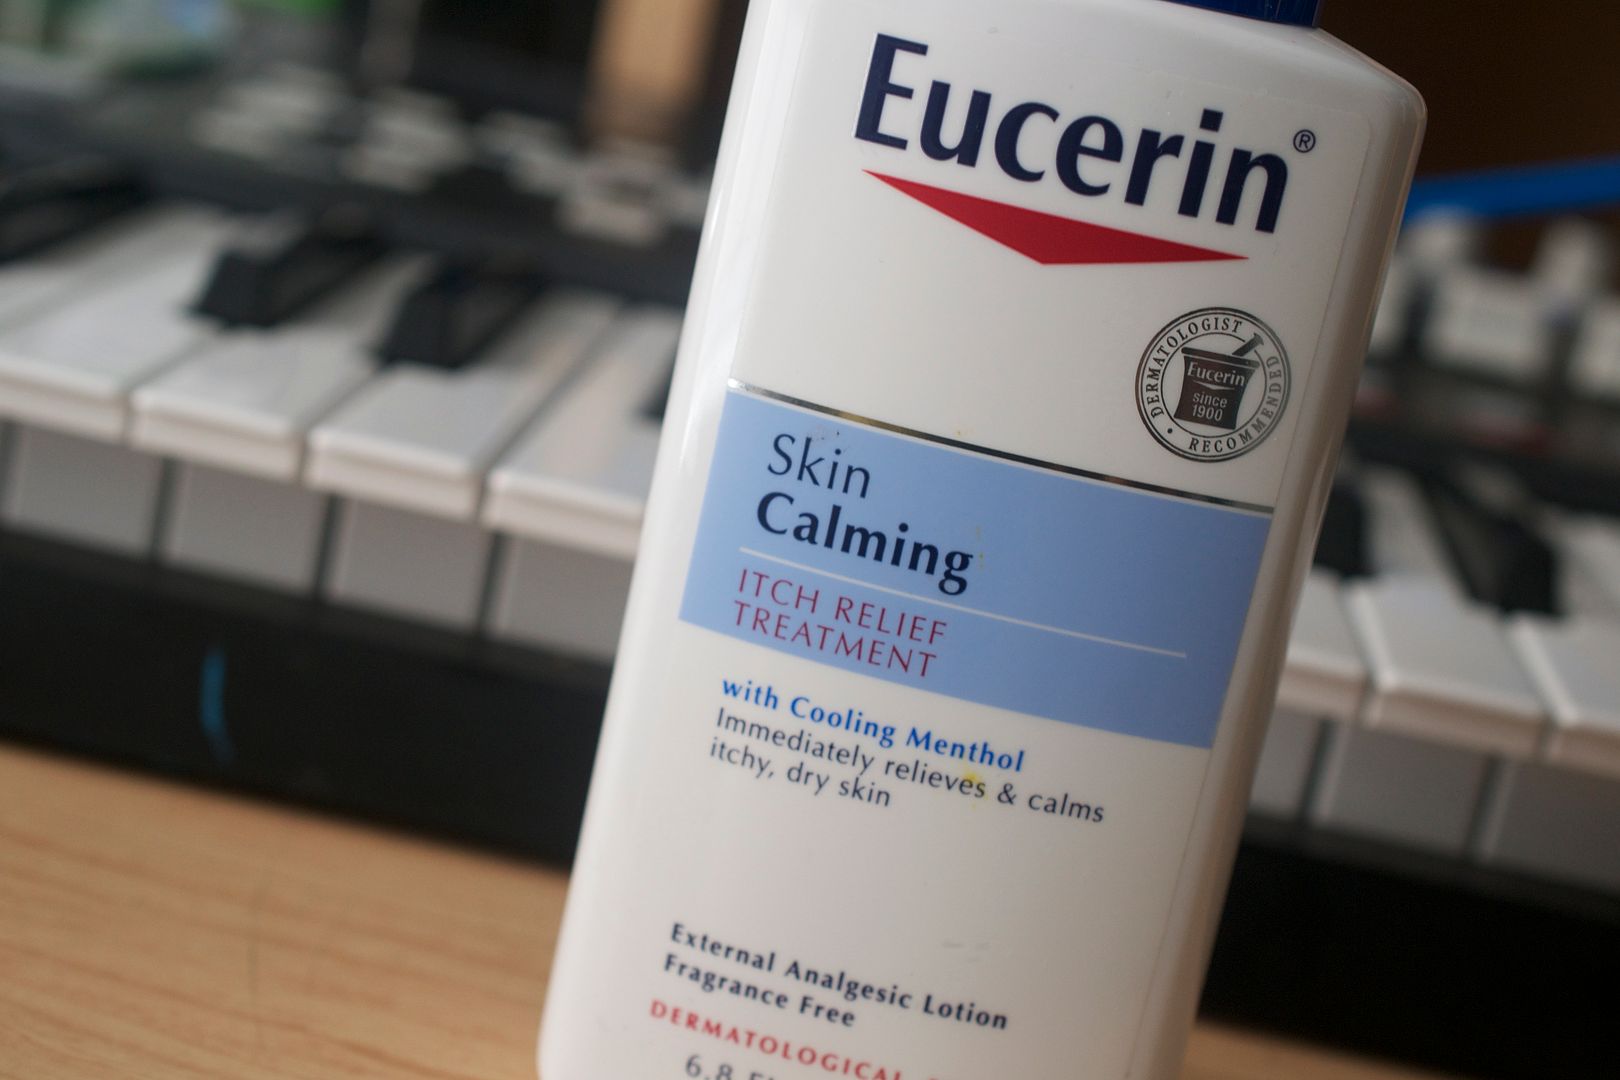 Eucerin Skin Calming 